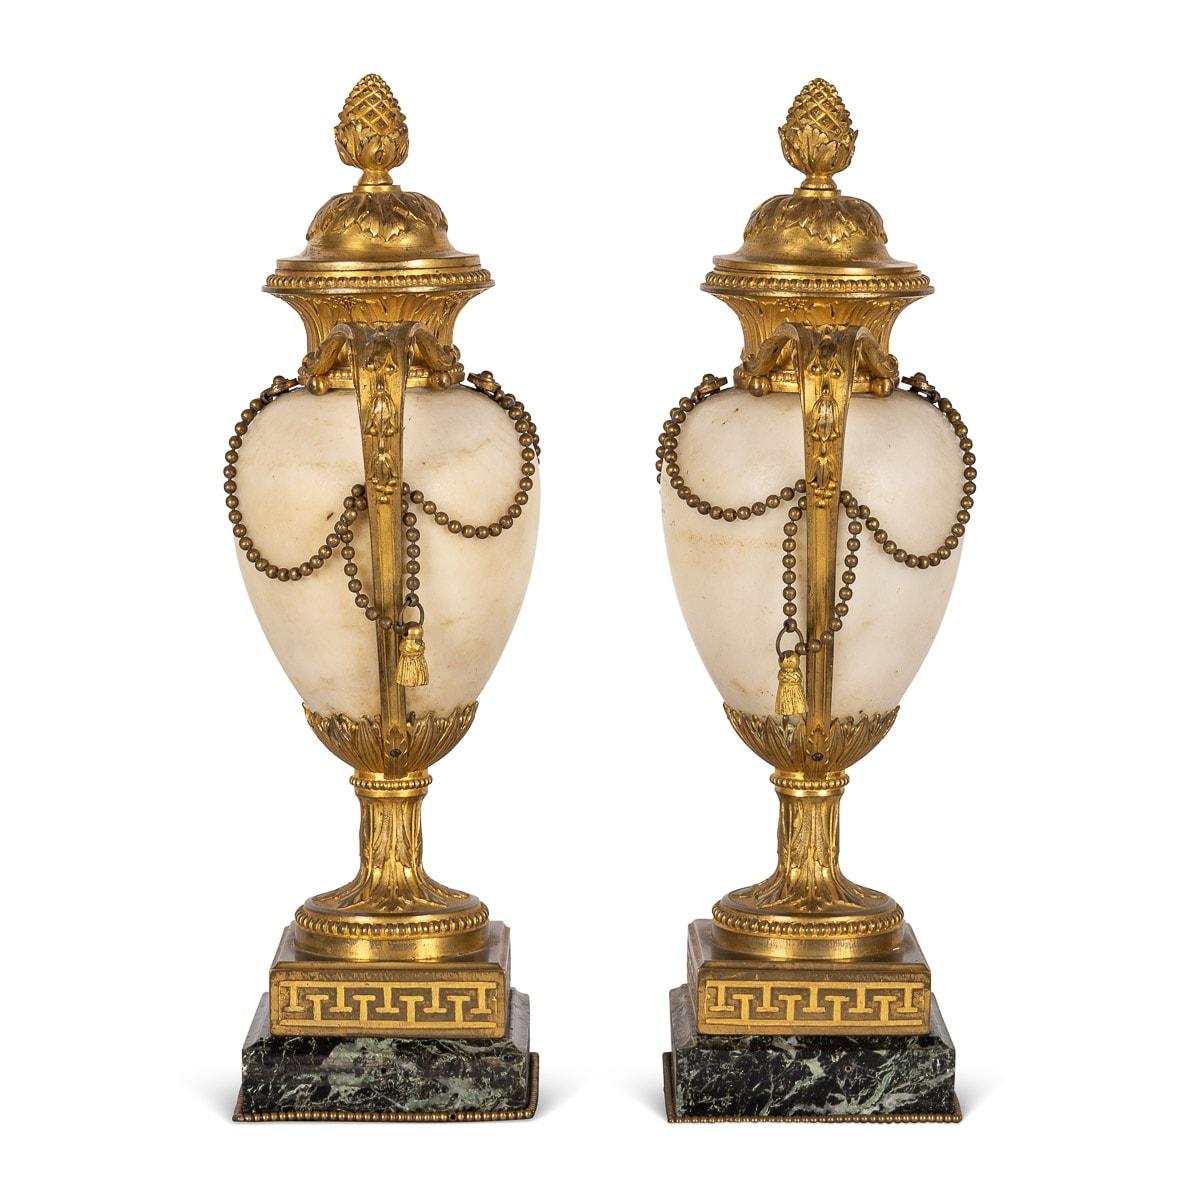 19th Century French Napoleon III Ormolu & White Marble Urns, circa 1850 For Sale 2